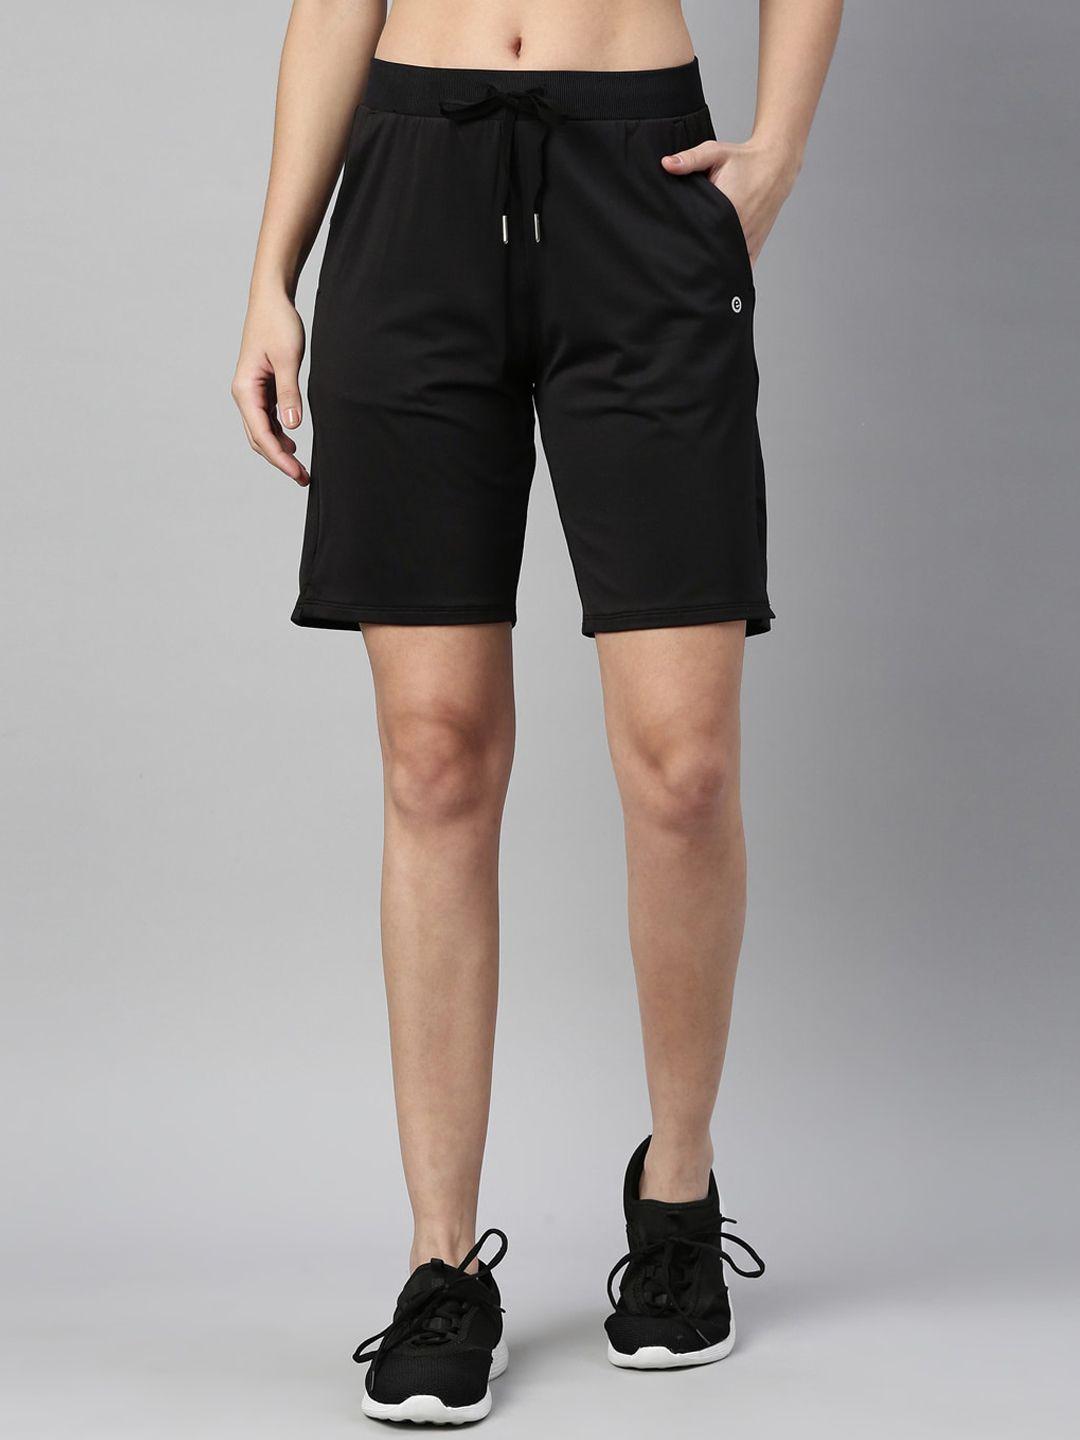 enamor women black loose fit outdoor sports shorts